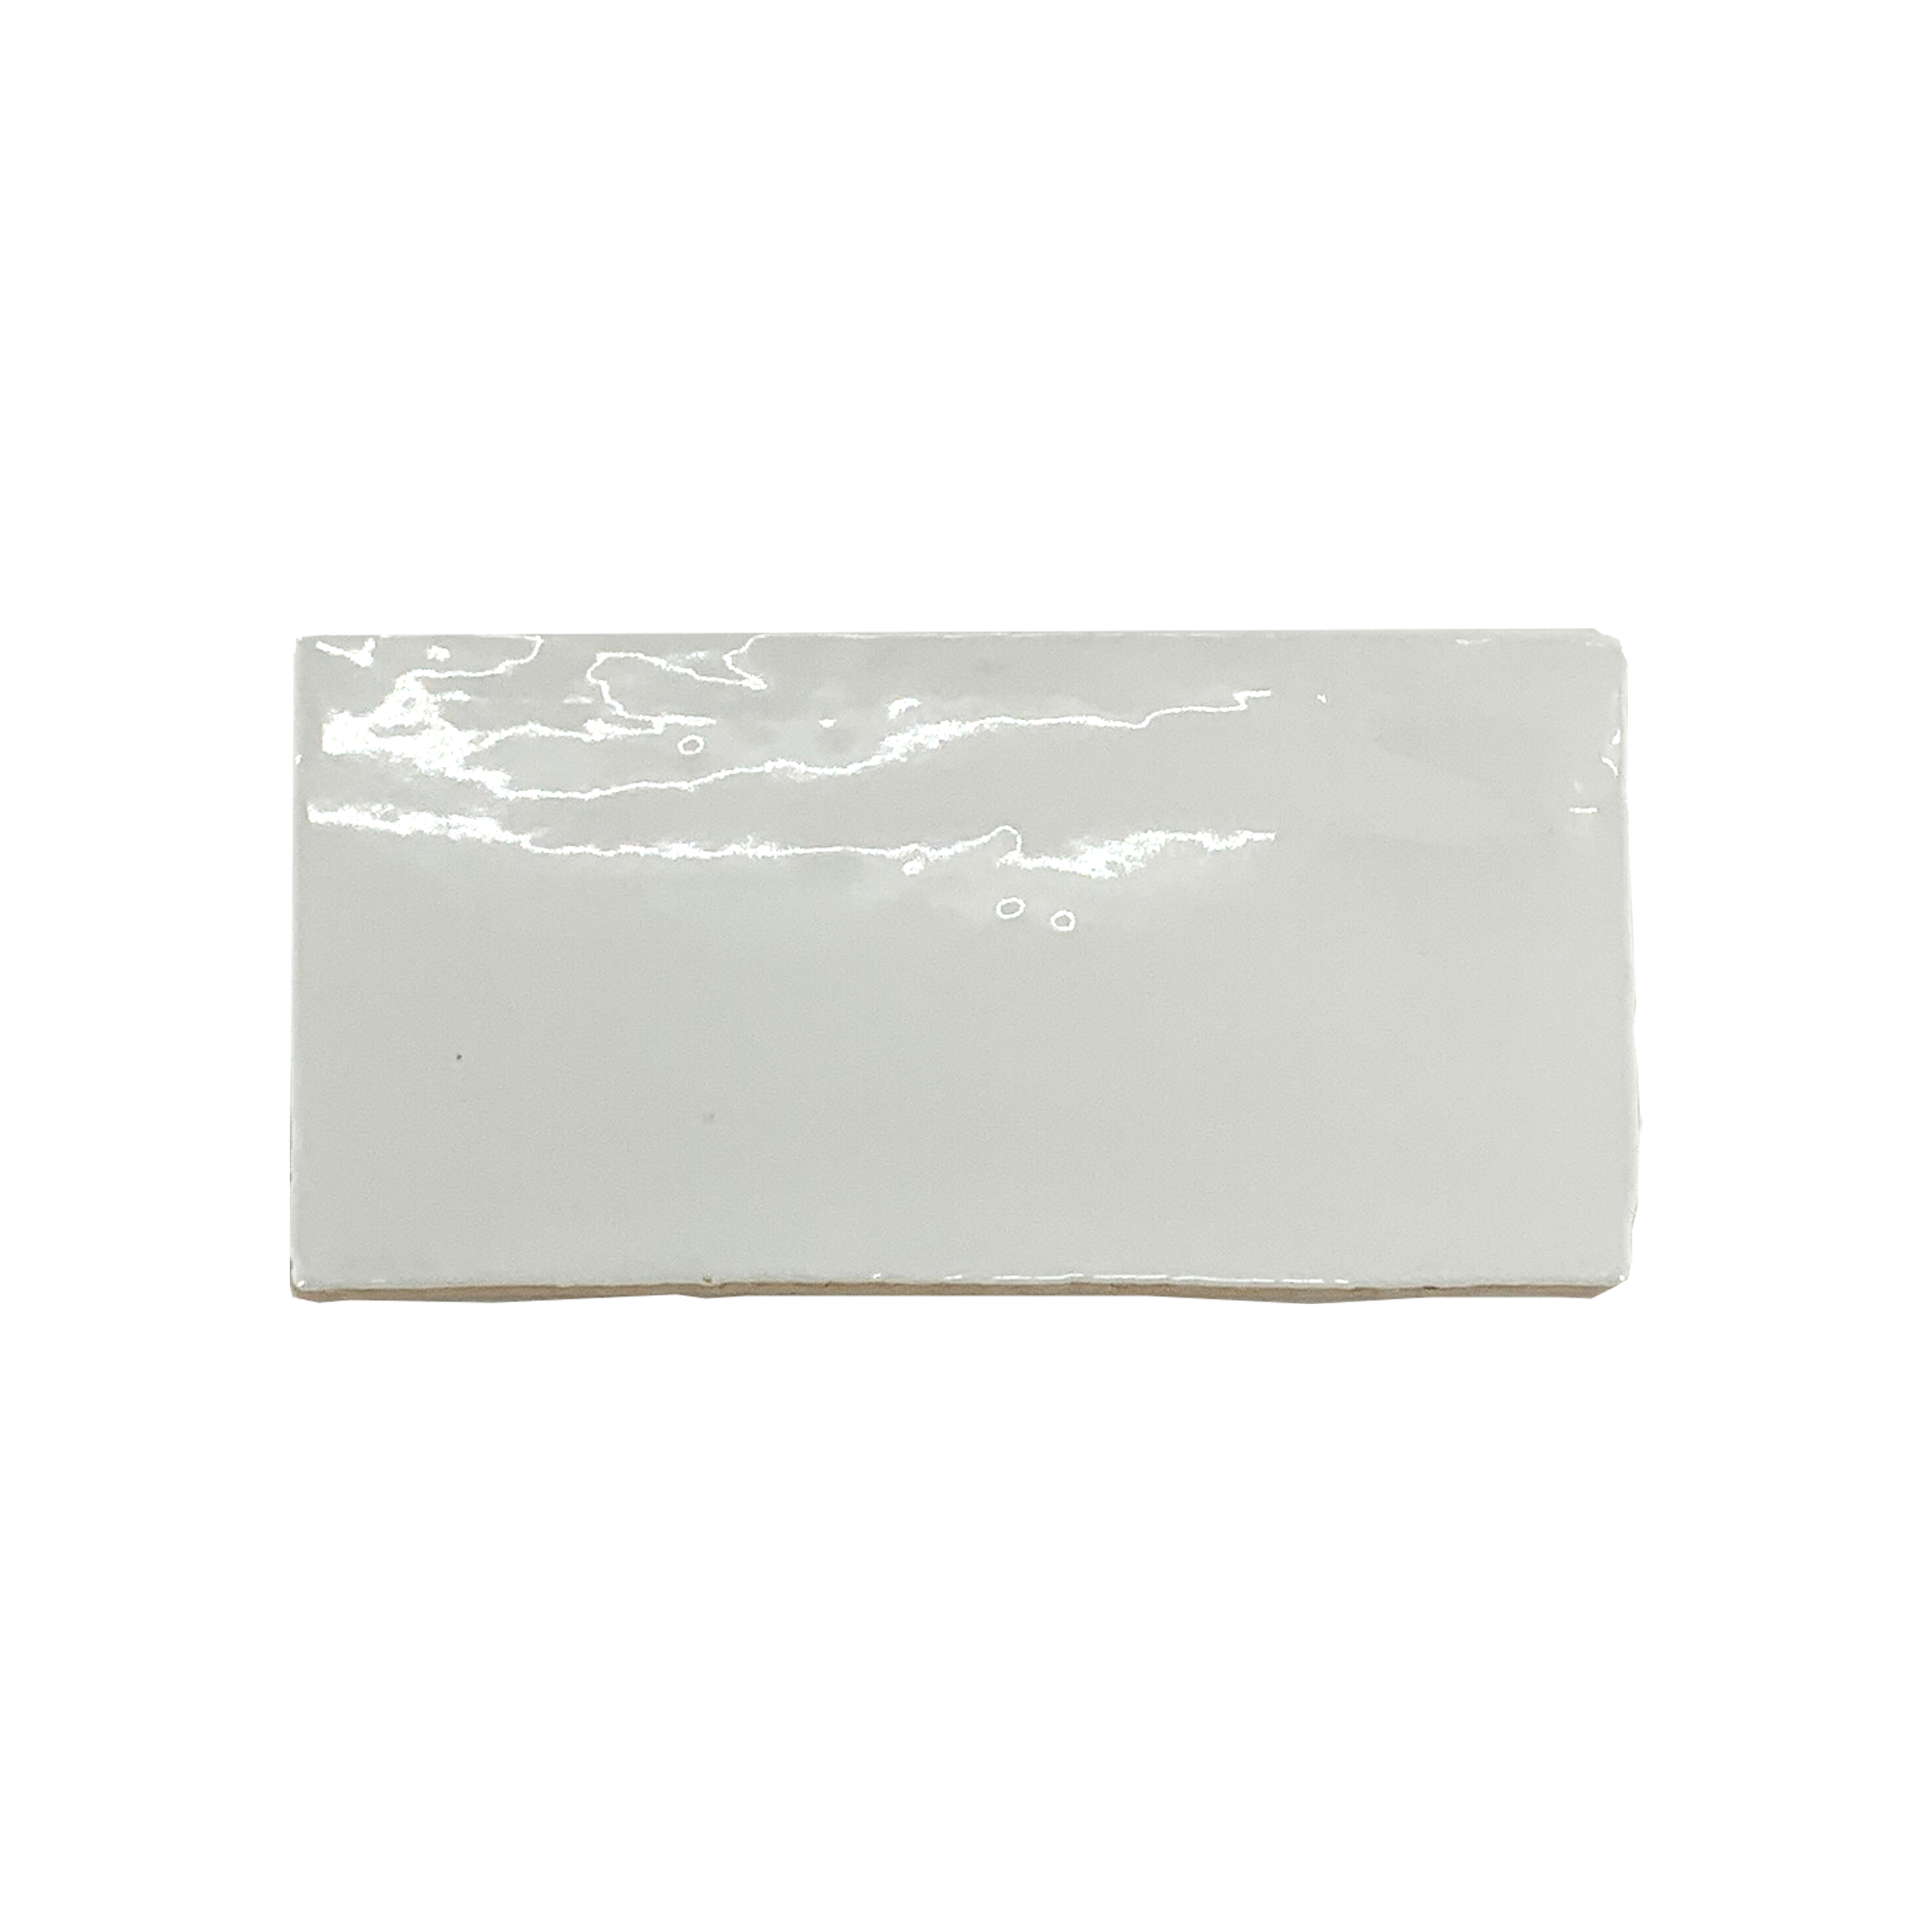 Elon Hampton White Ceramic Rectangle Wall Tile 3x6x0.375 Glossy BC201G Surface Group International Product